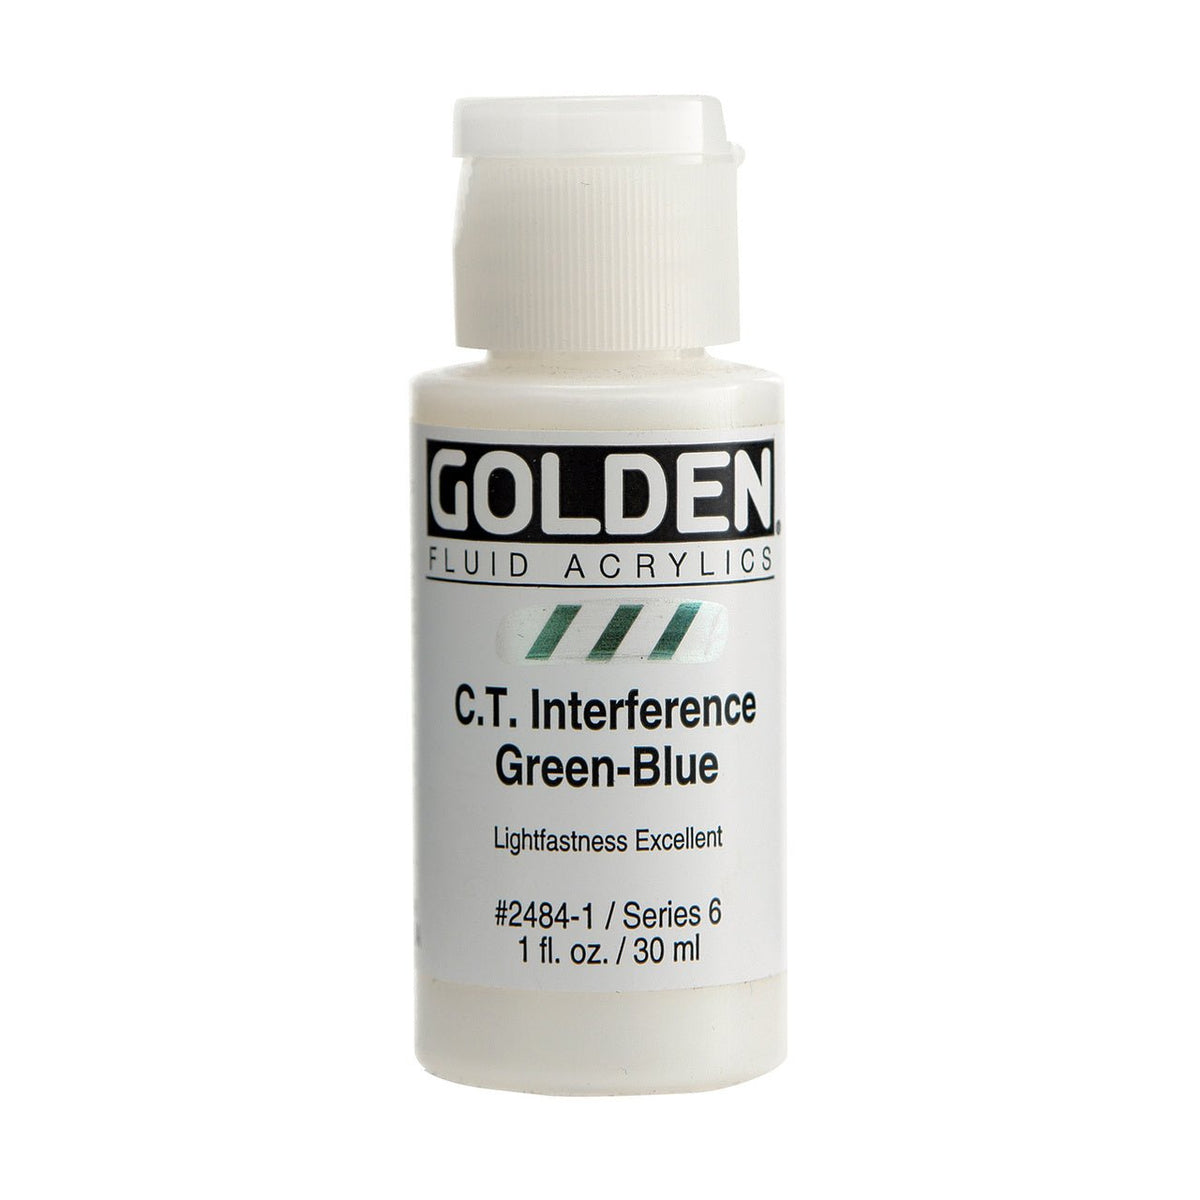 Golden Fluid Acrylic Interference C.T. Green-Blue 1 oz - merriartist.com